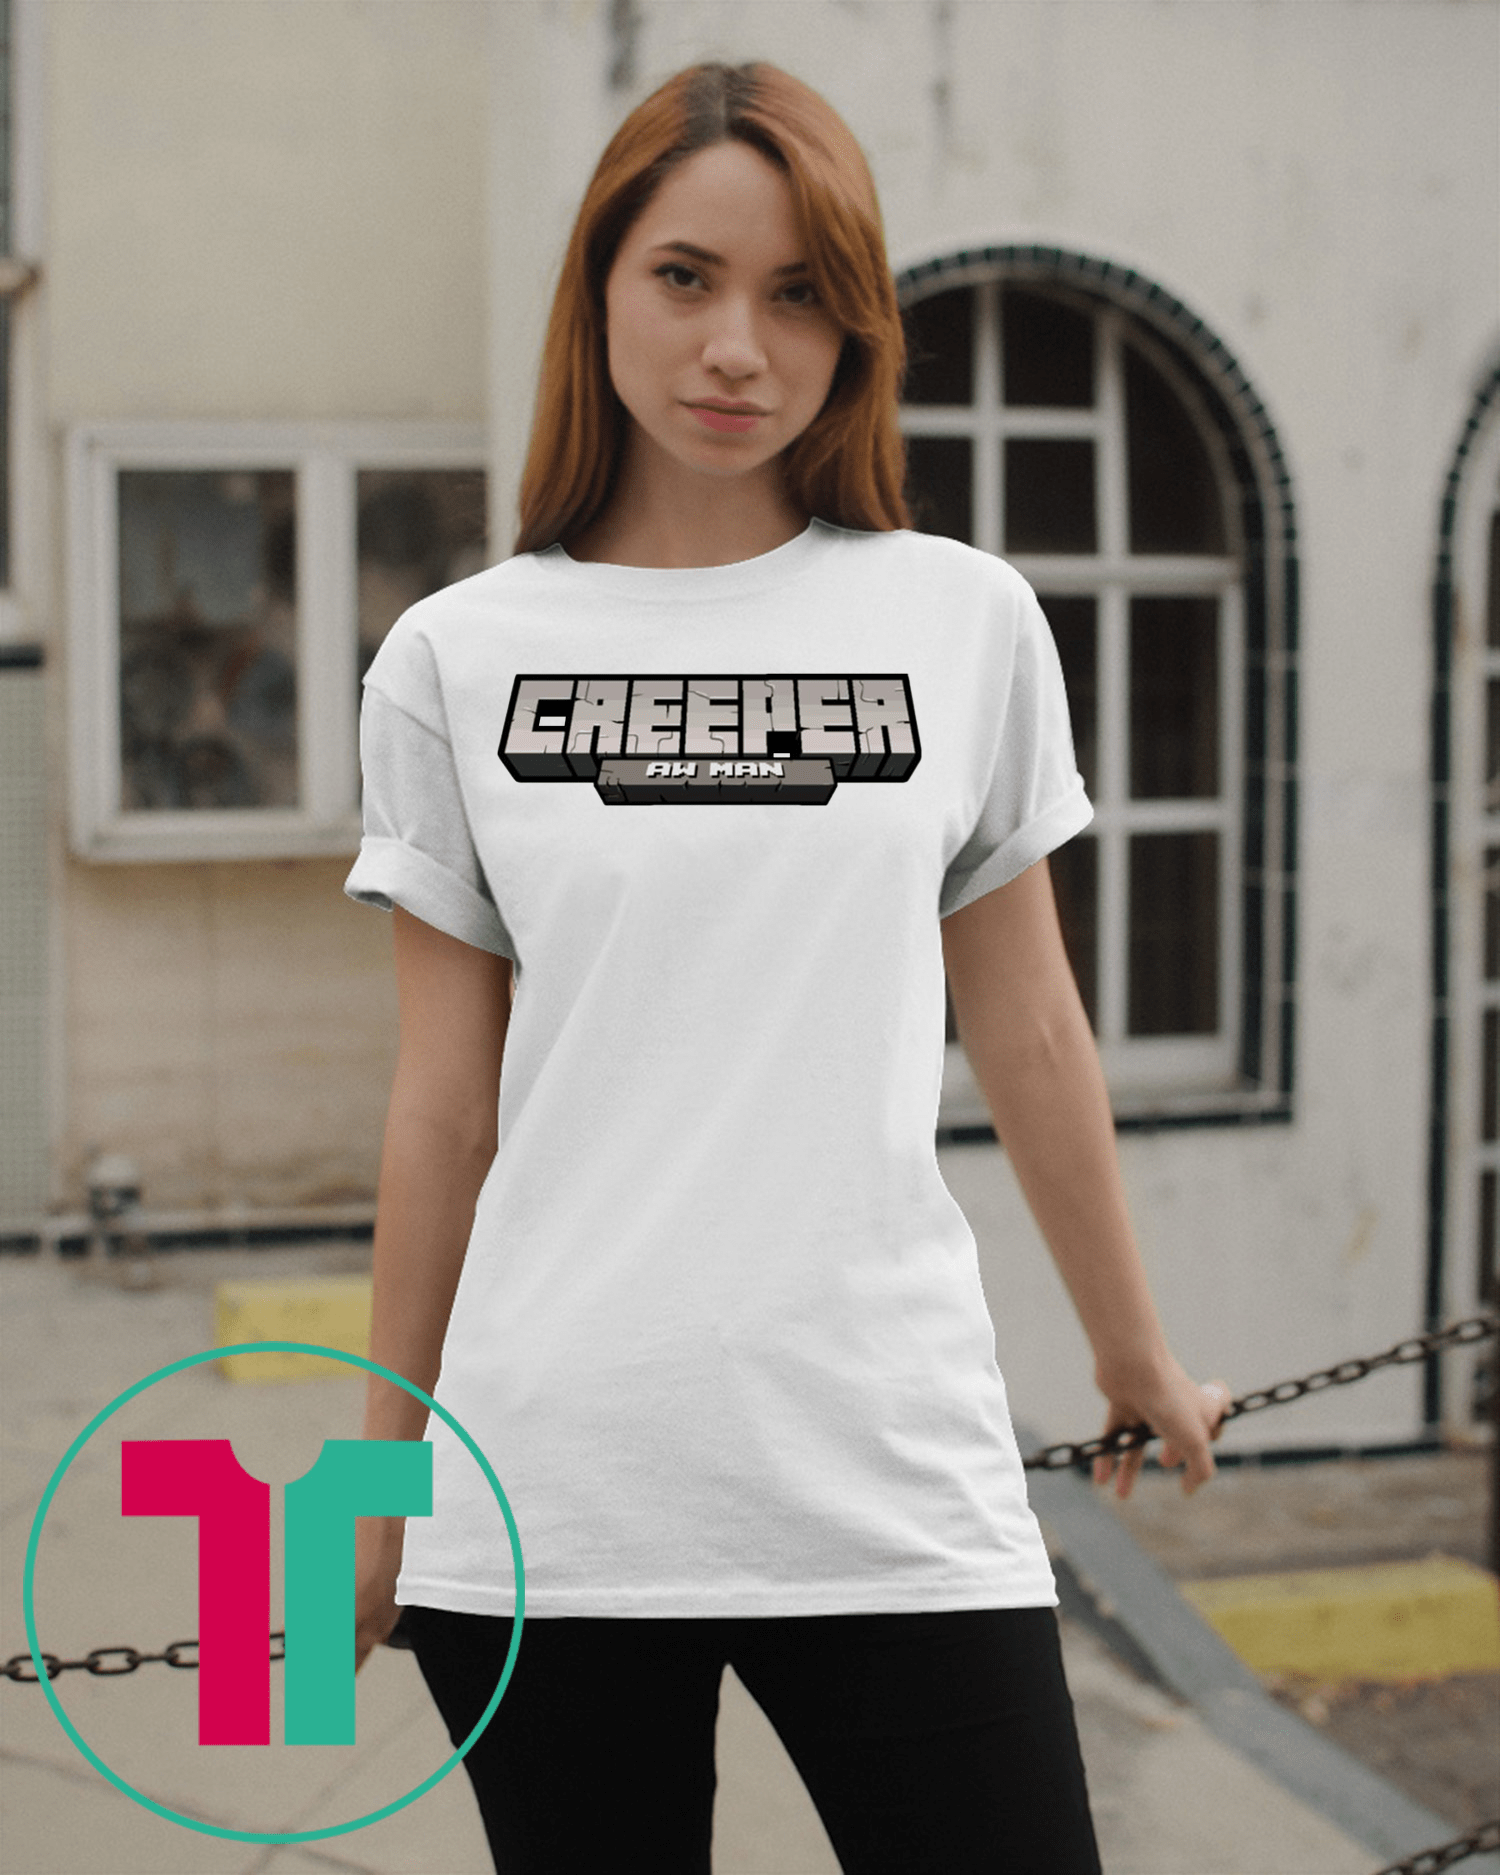 Creeper Aw Man Shirt Reviewshirts Office